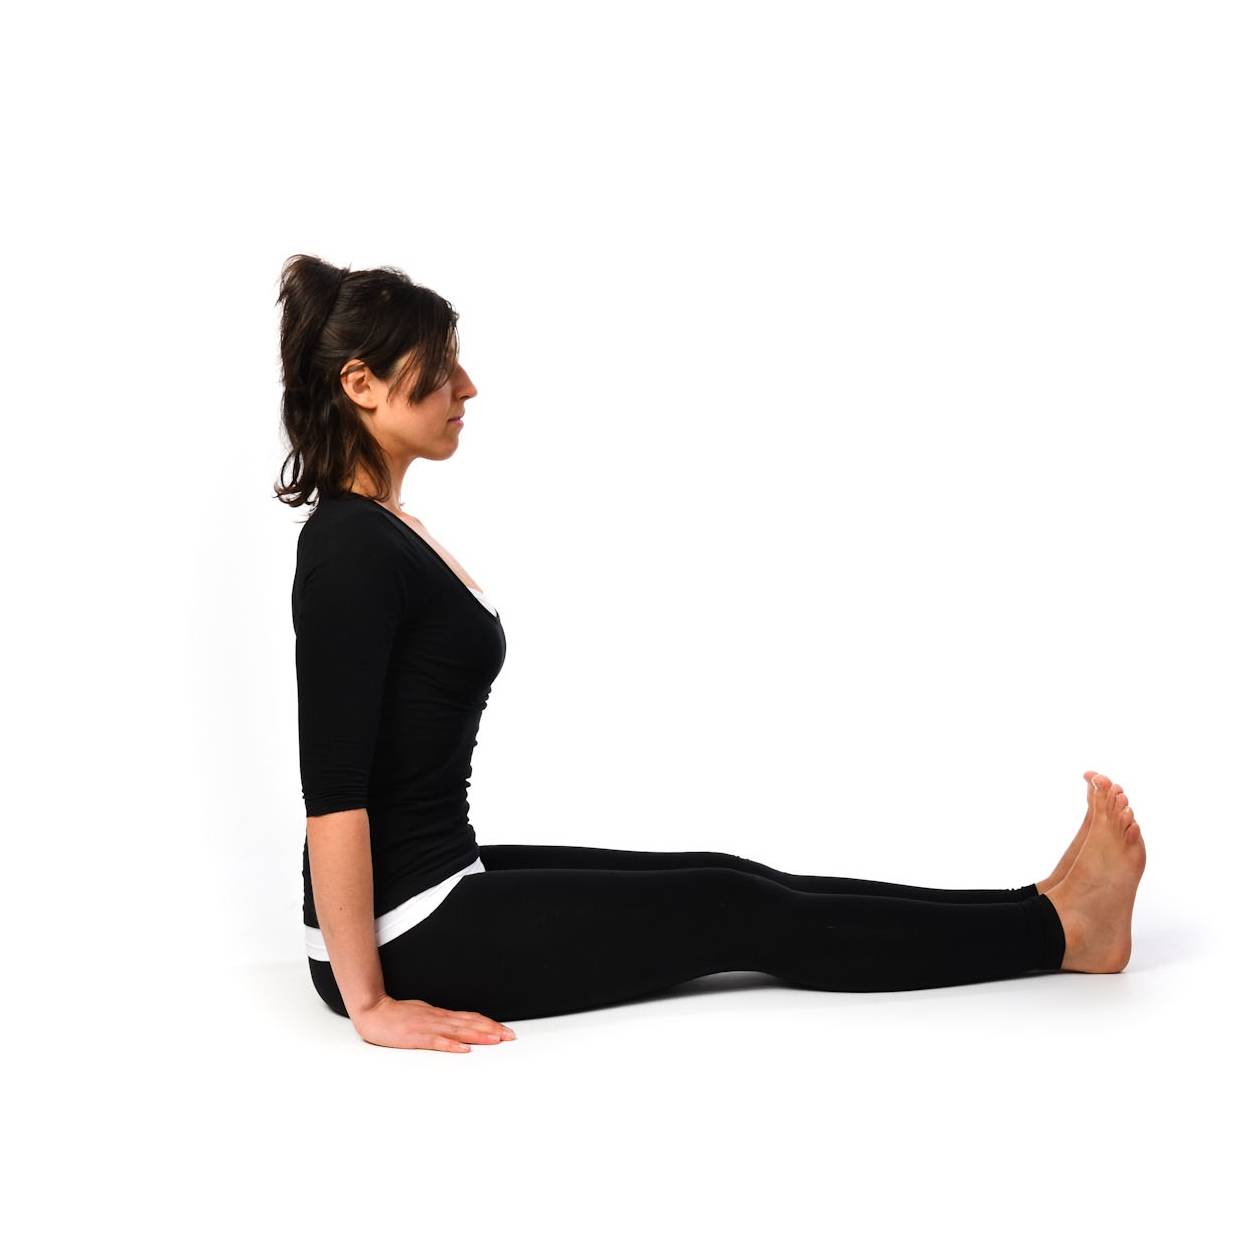 Чатуранга-дандасана — вытянутый горизонтальный упор. анатомия йоги